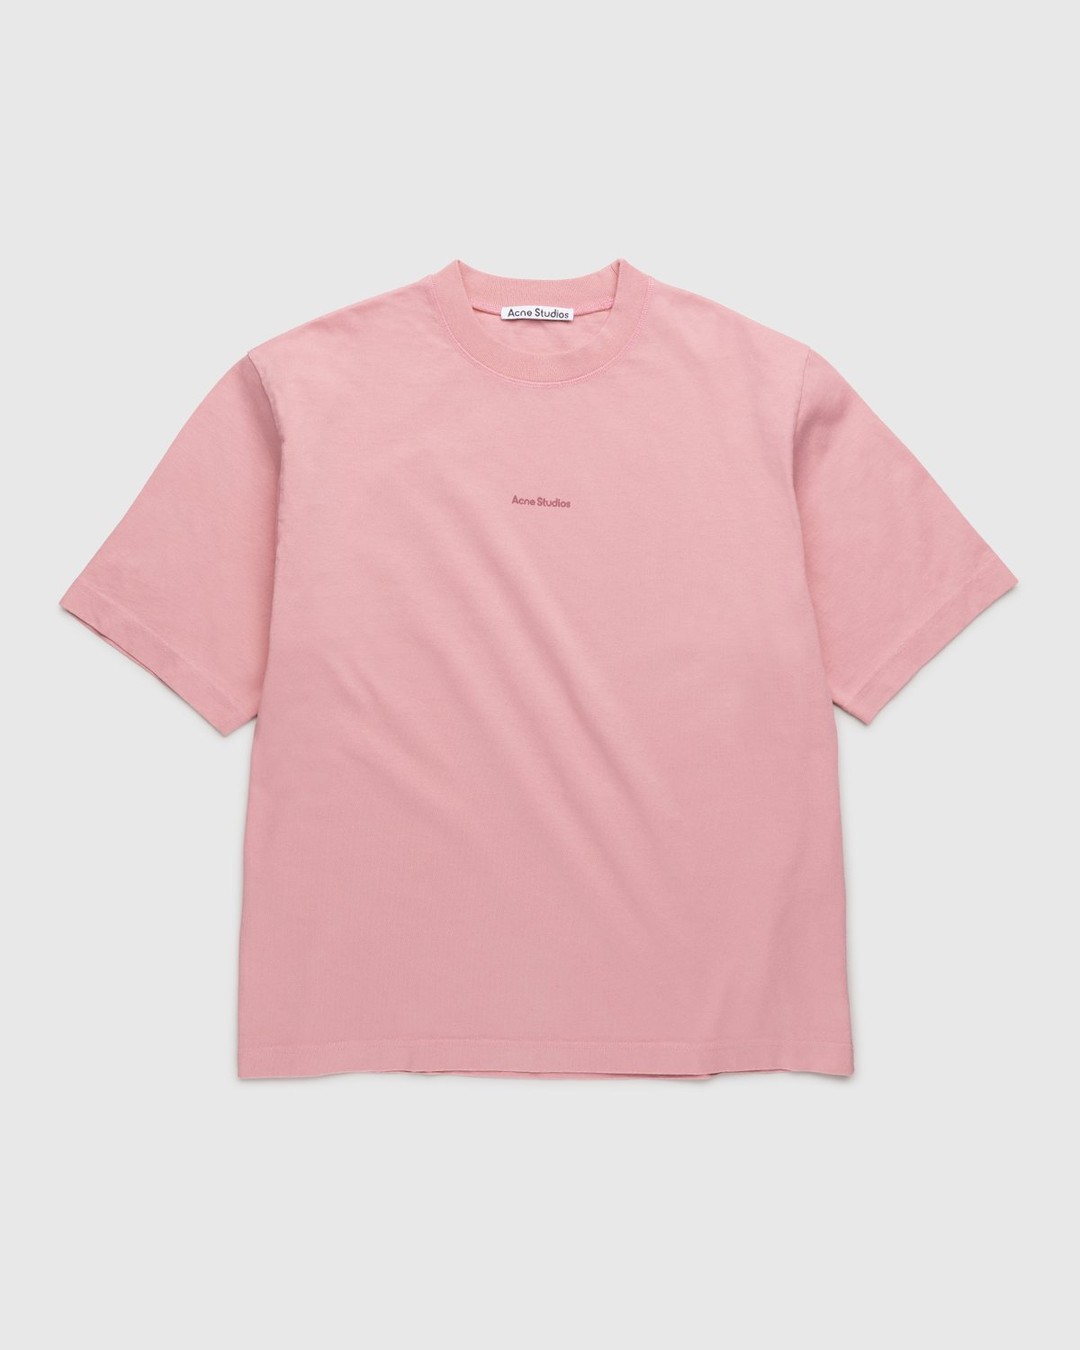 Acne Studios – Logo T-Shirt Pink - T-Shirts - Pink - Image 1